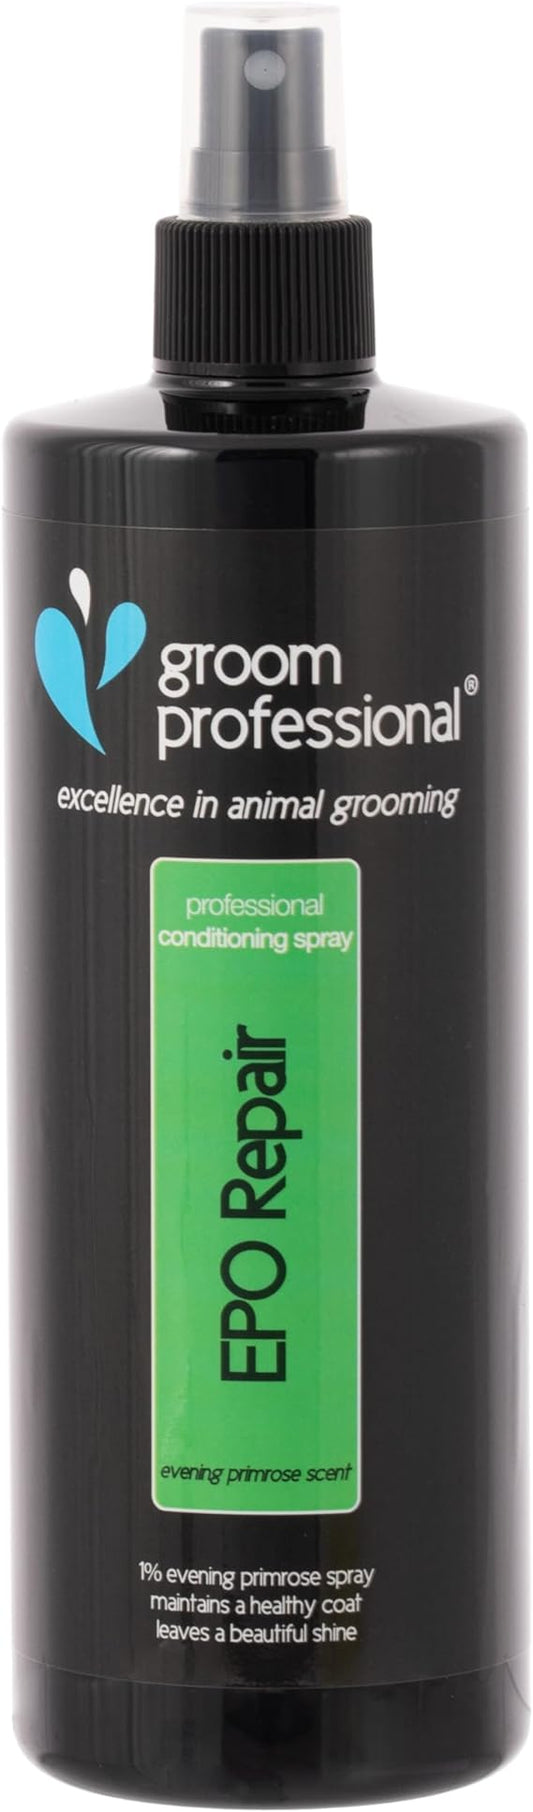 Groom Professional Evening Primrose Oil Spray For Dog 200ml